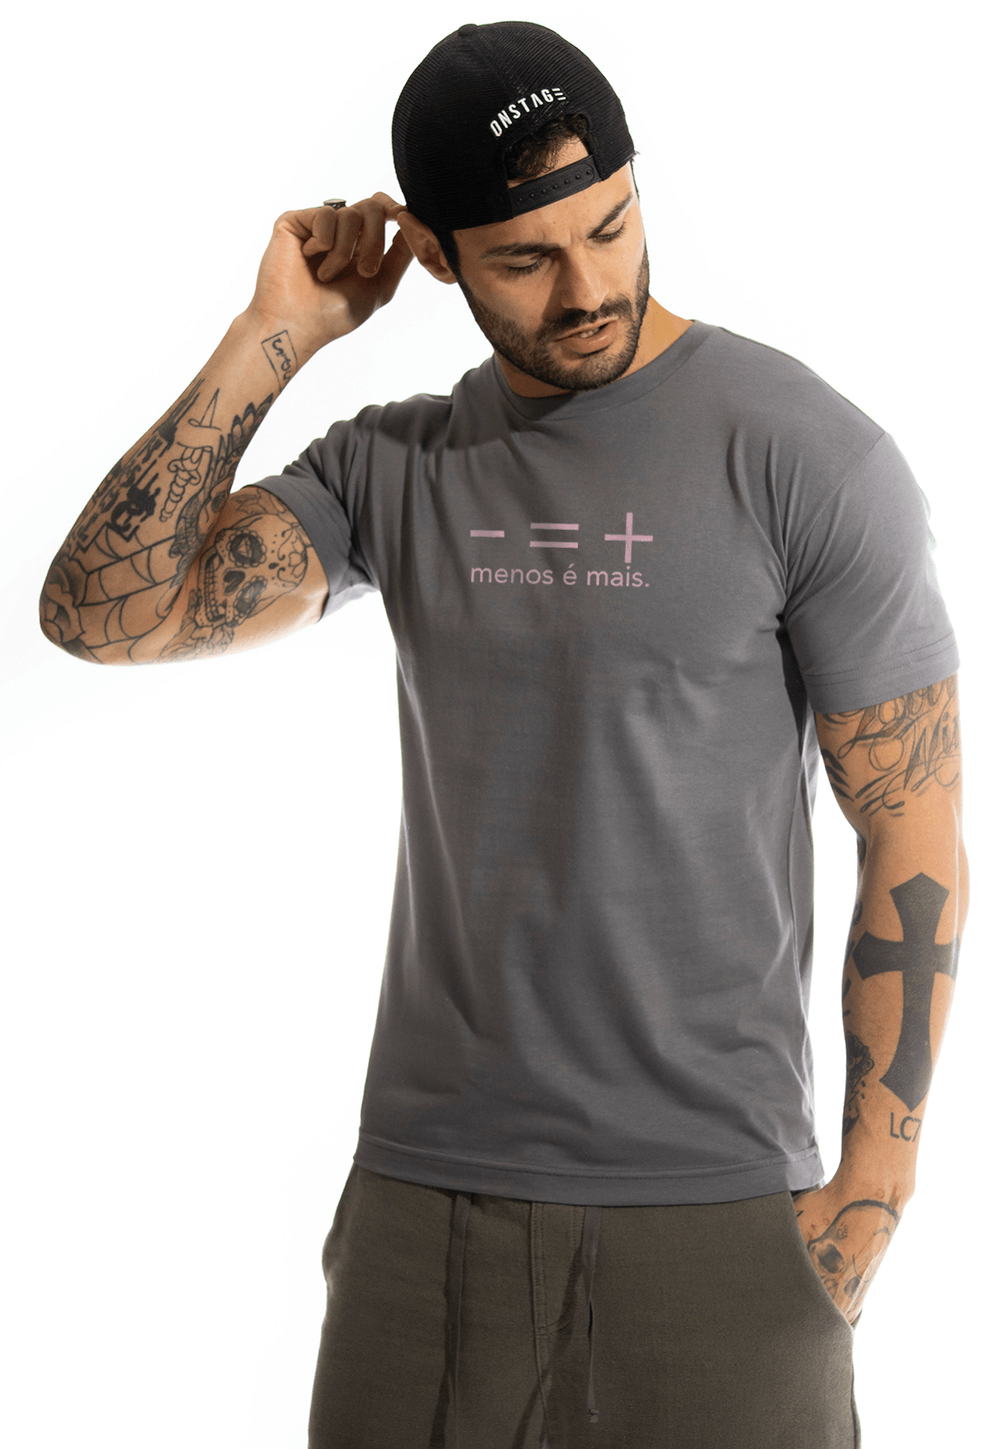 Camiseta Arimlap Mais e Menos Cor:Chumbo;Tamanho:P;Genero:Masculino